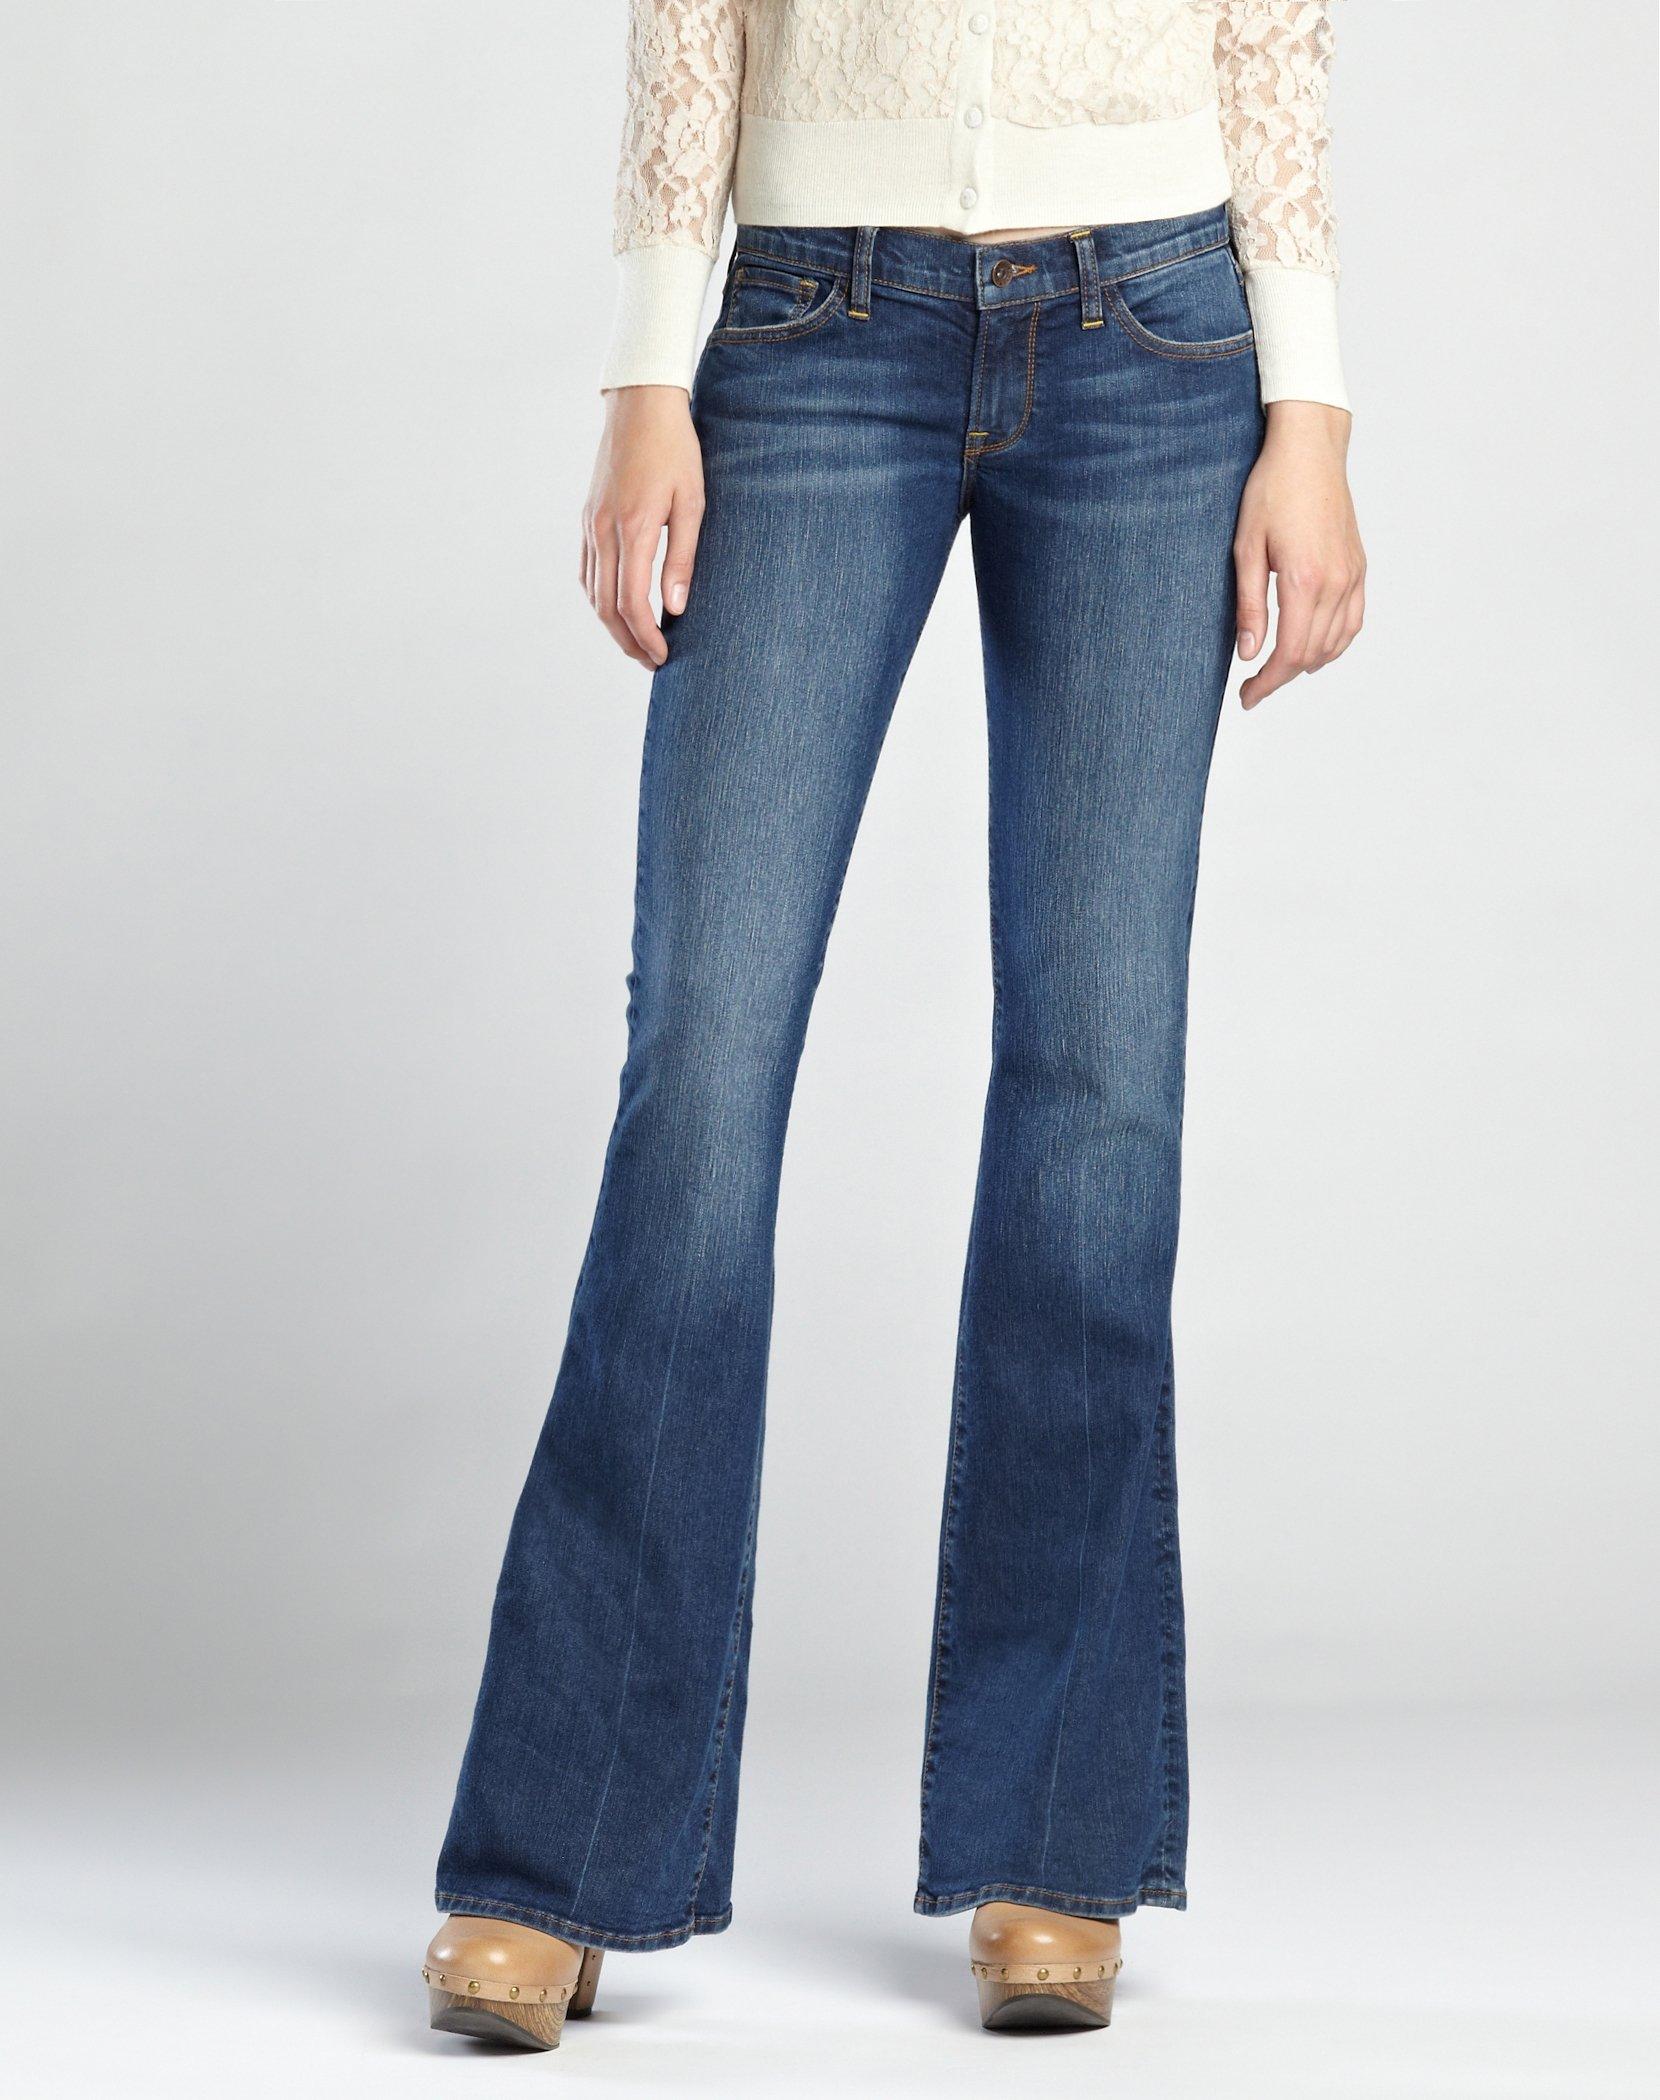 wrangler jeans size 44